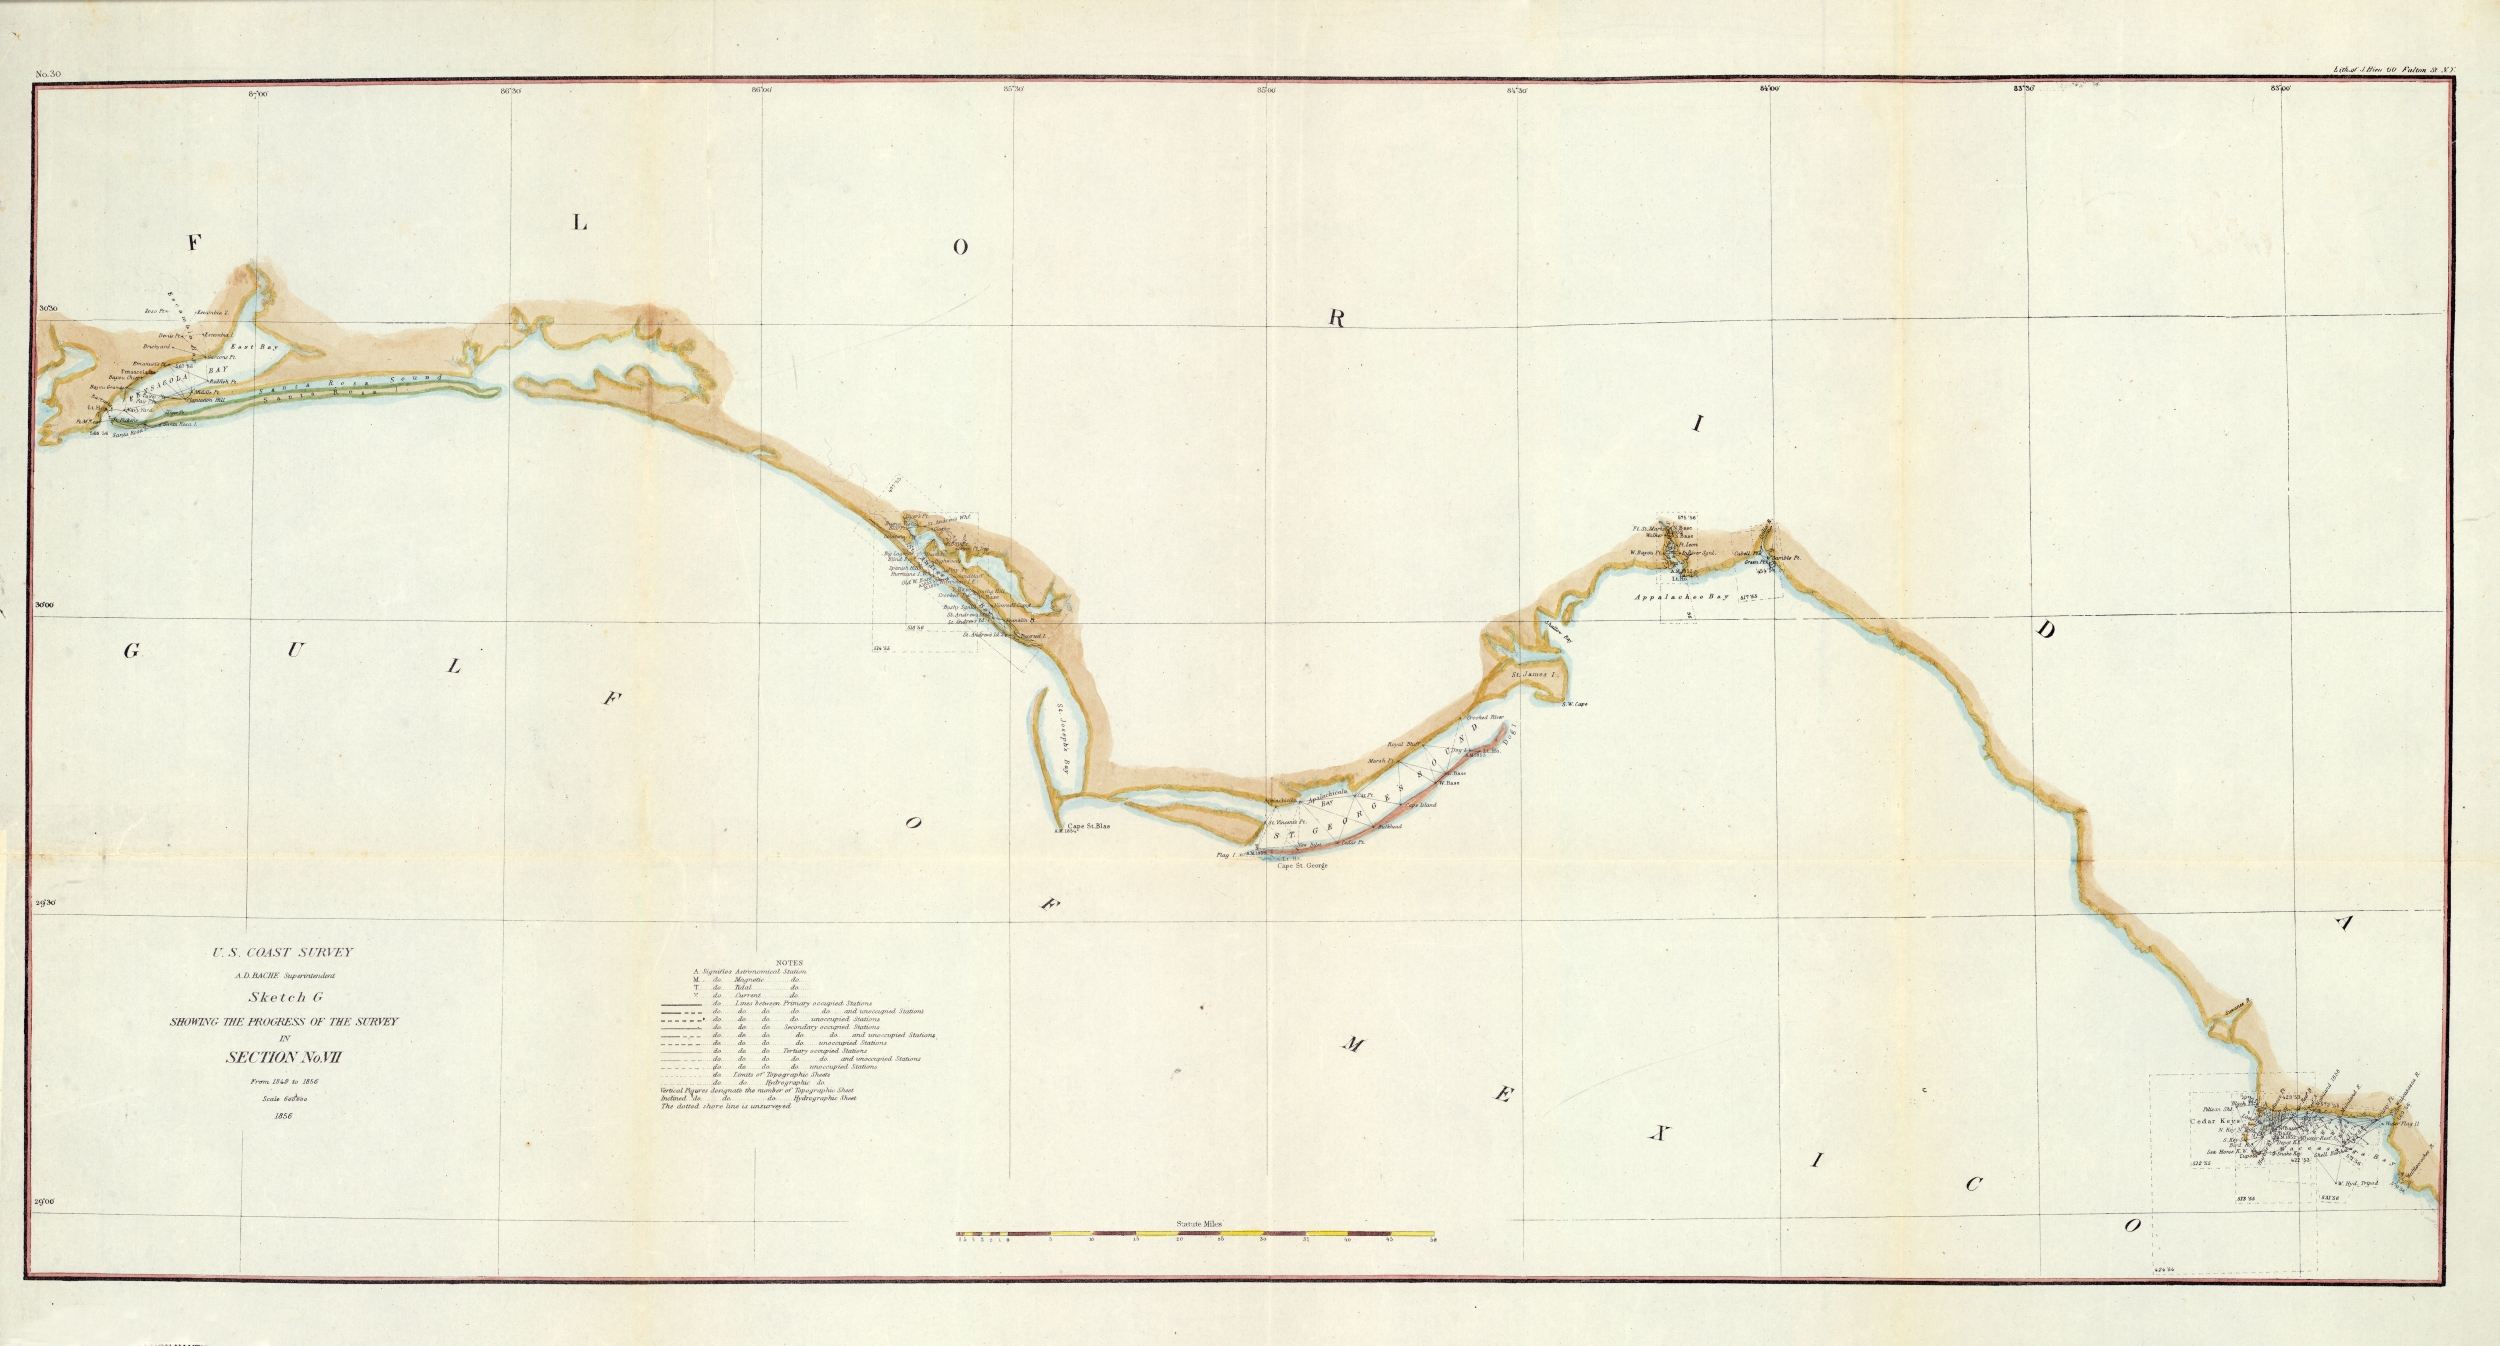 U.S Coast Survey, Florida Panhandle, 1855